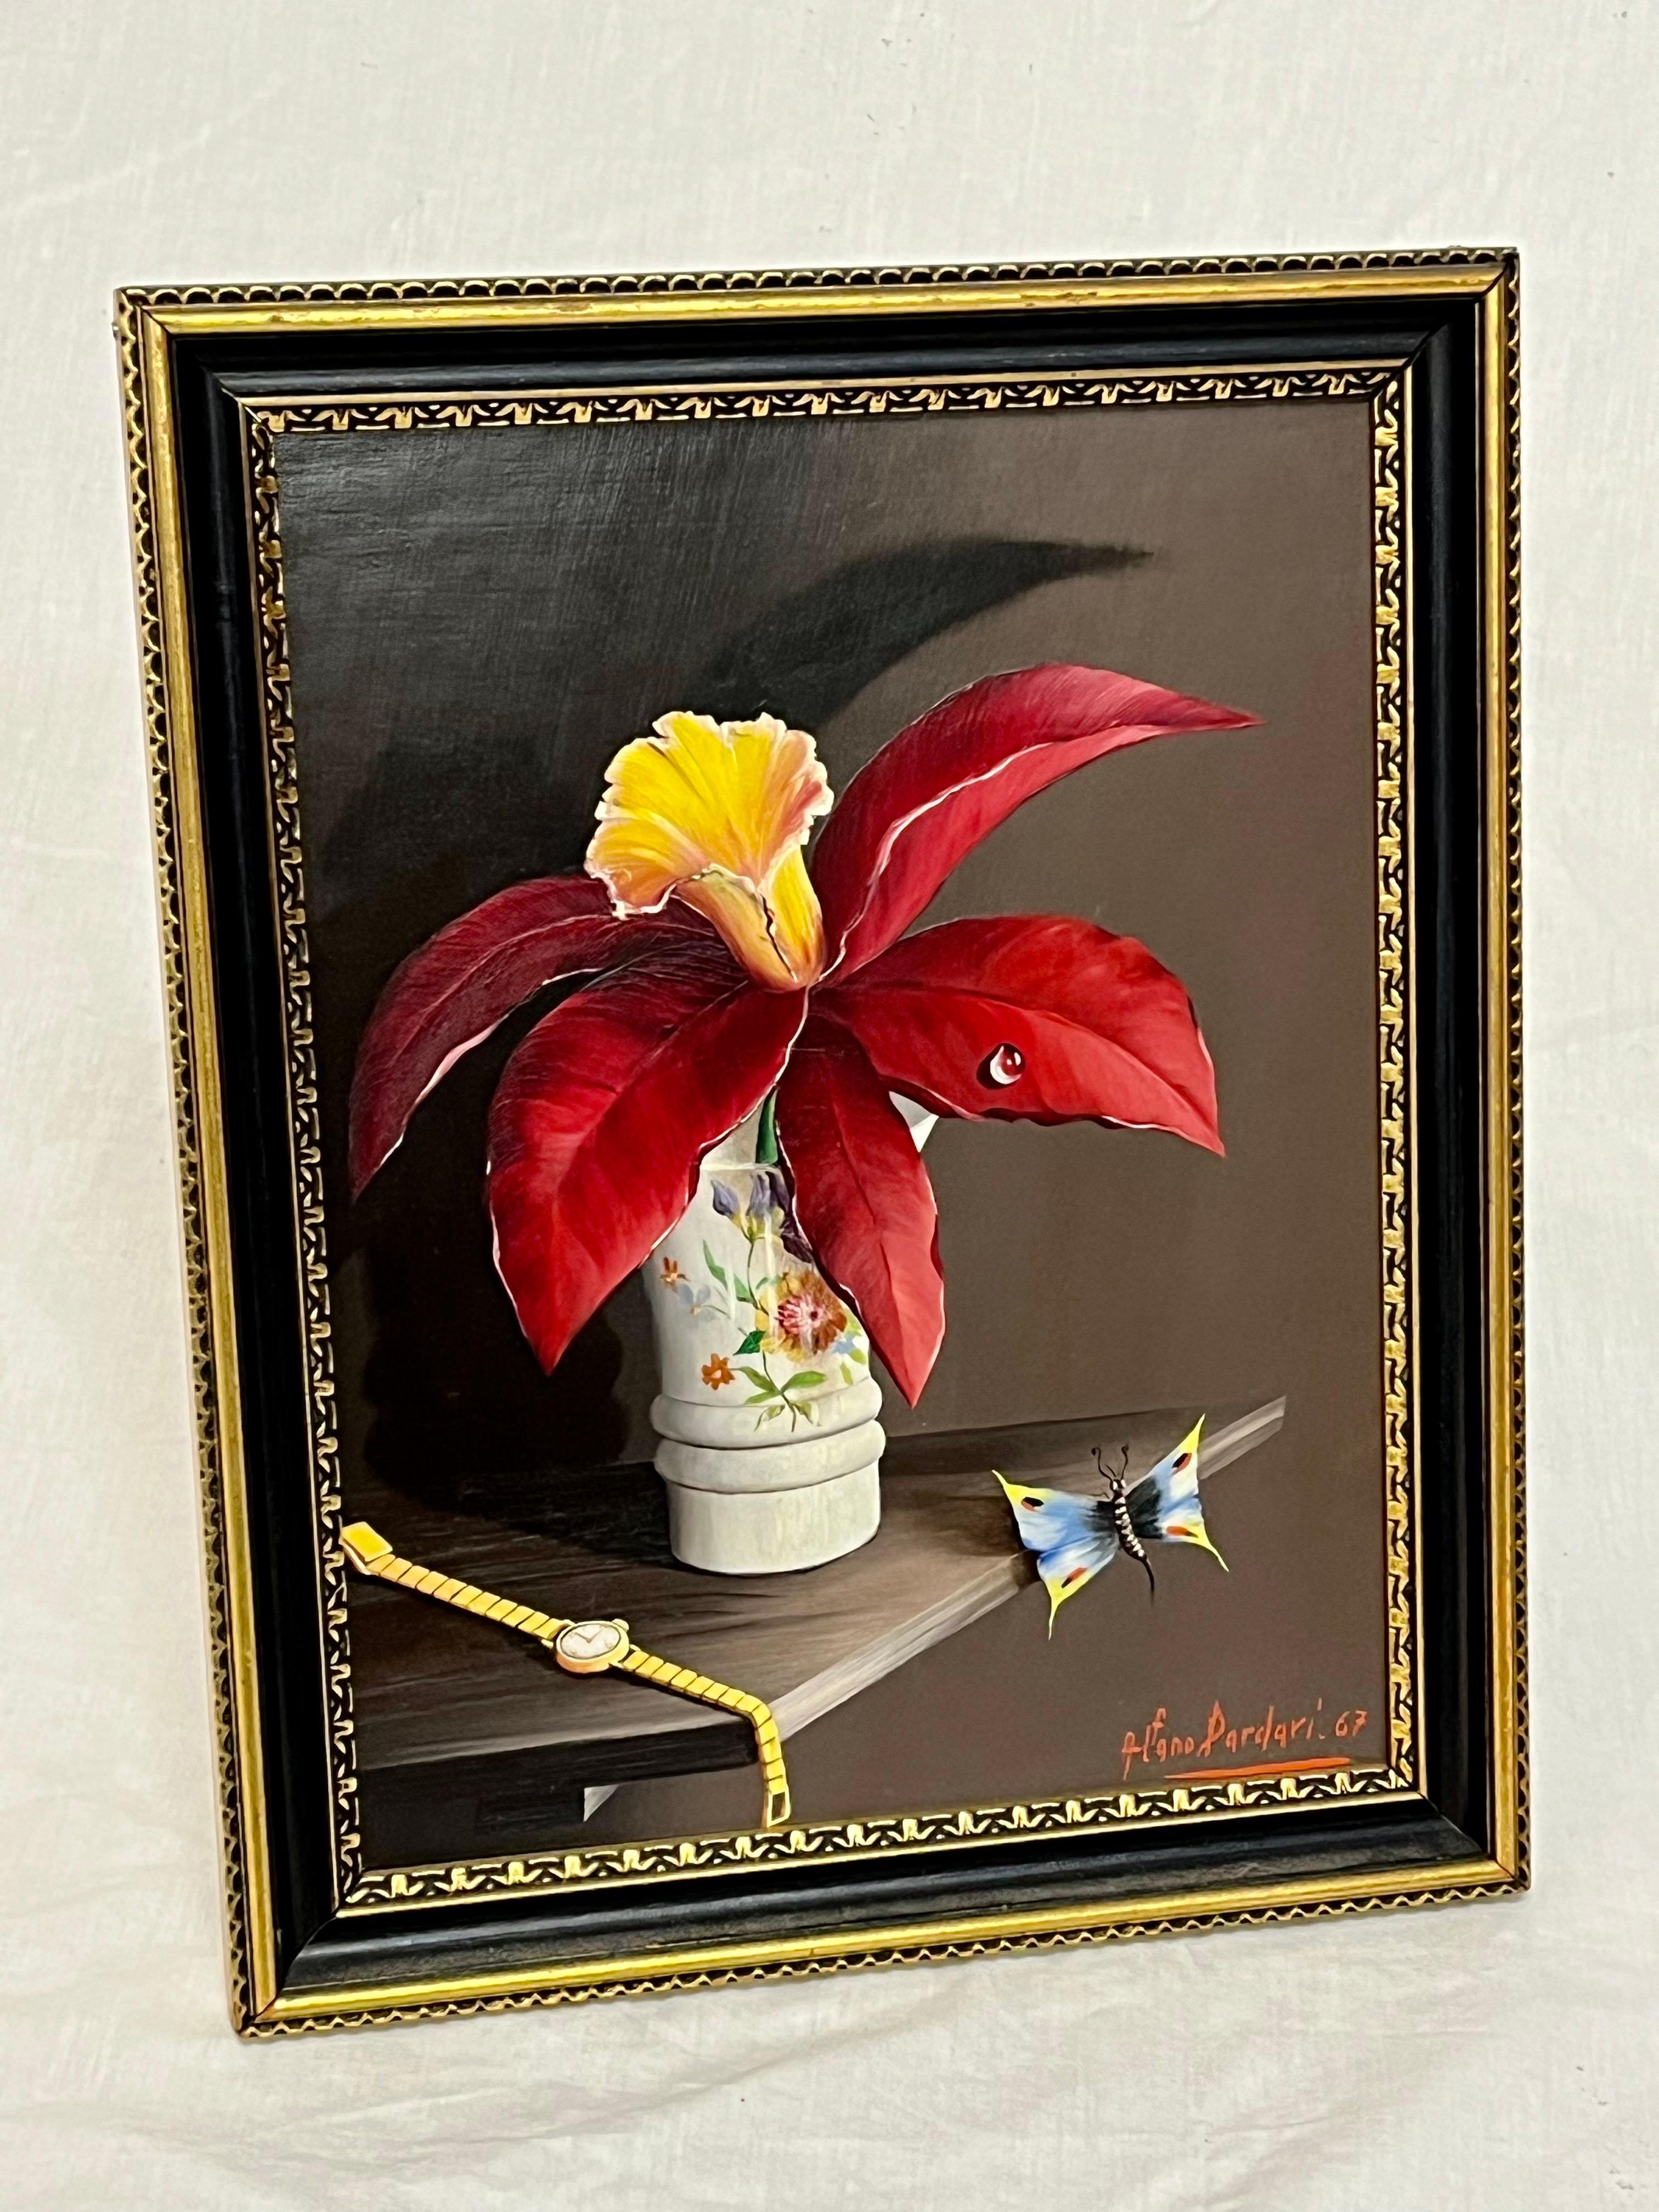 20th Century Alfano Dardari Midcentury Trompe L’oeil Still Life Oil Painting Framed For Sale